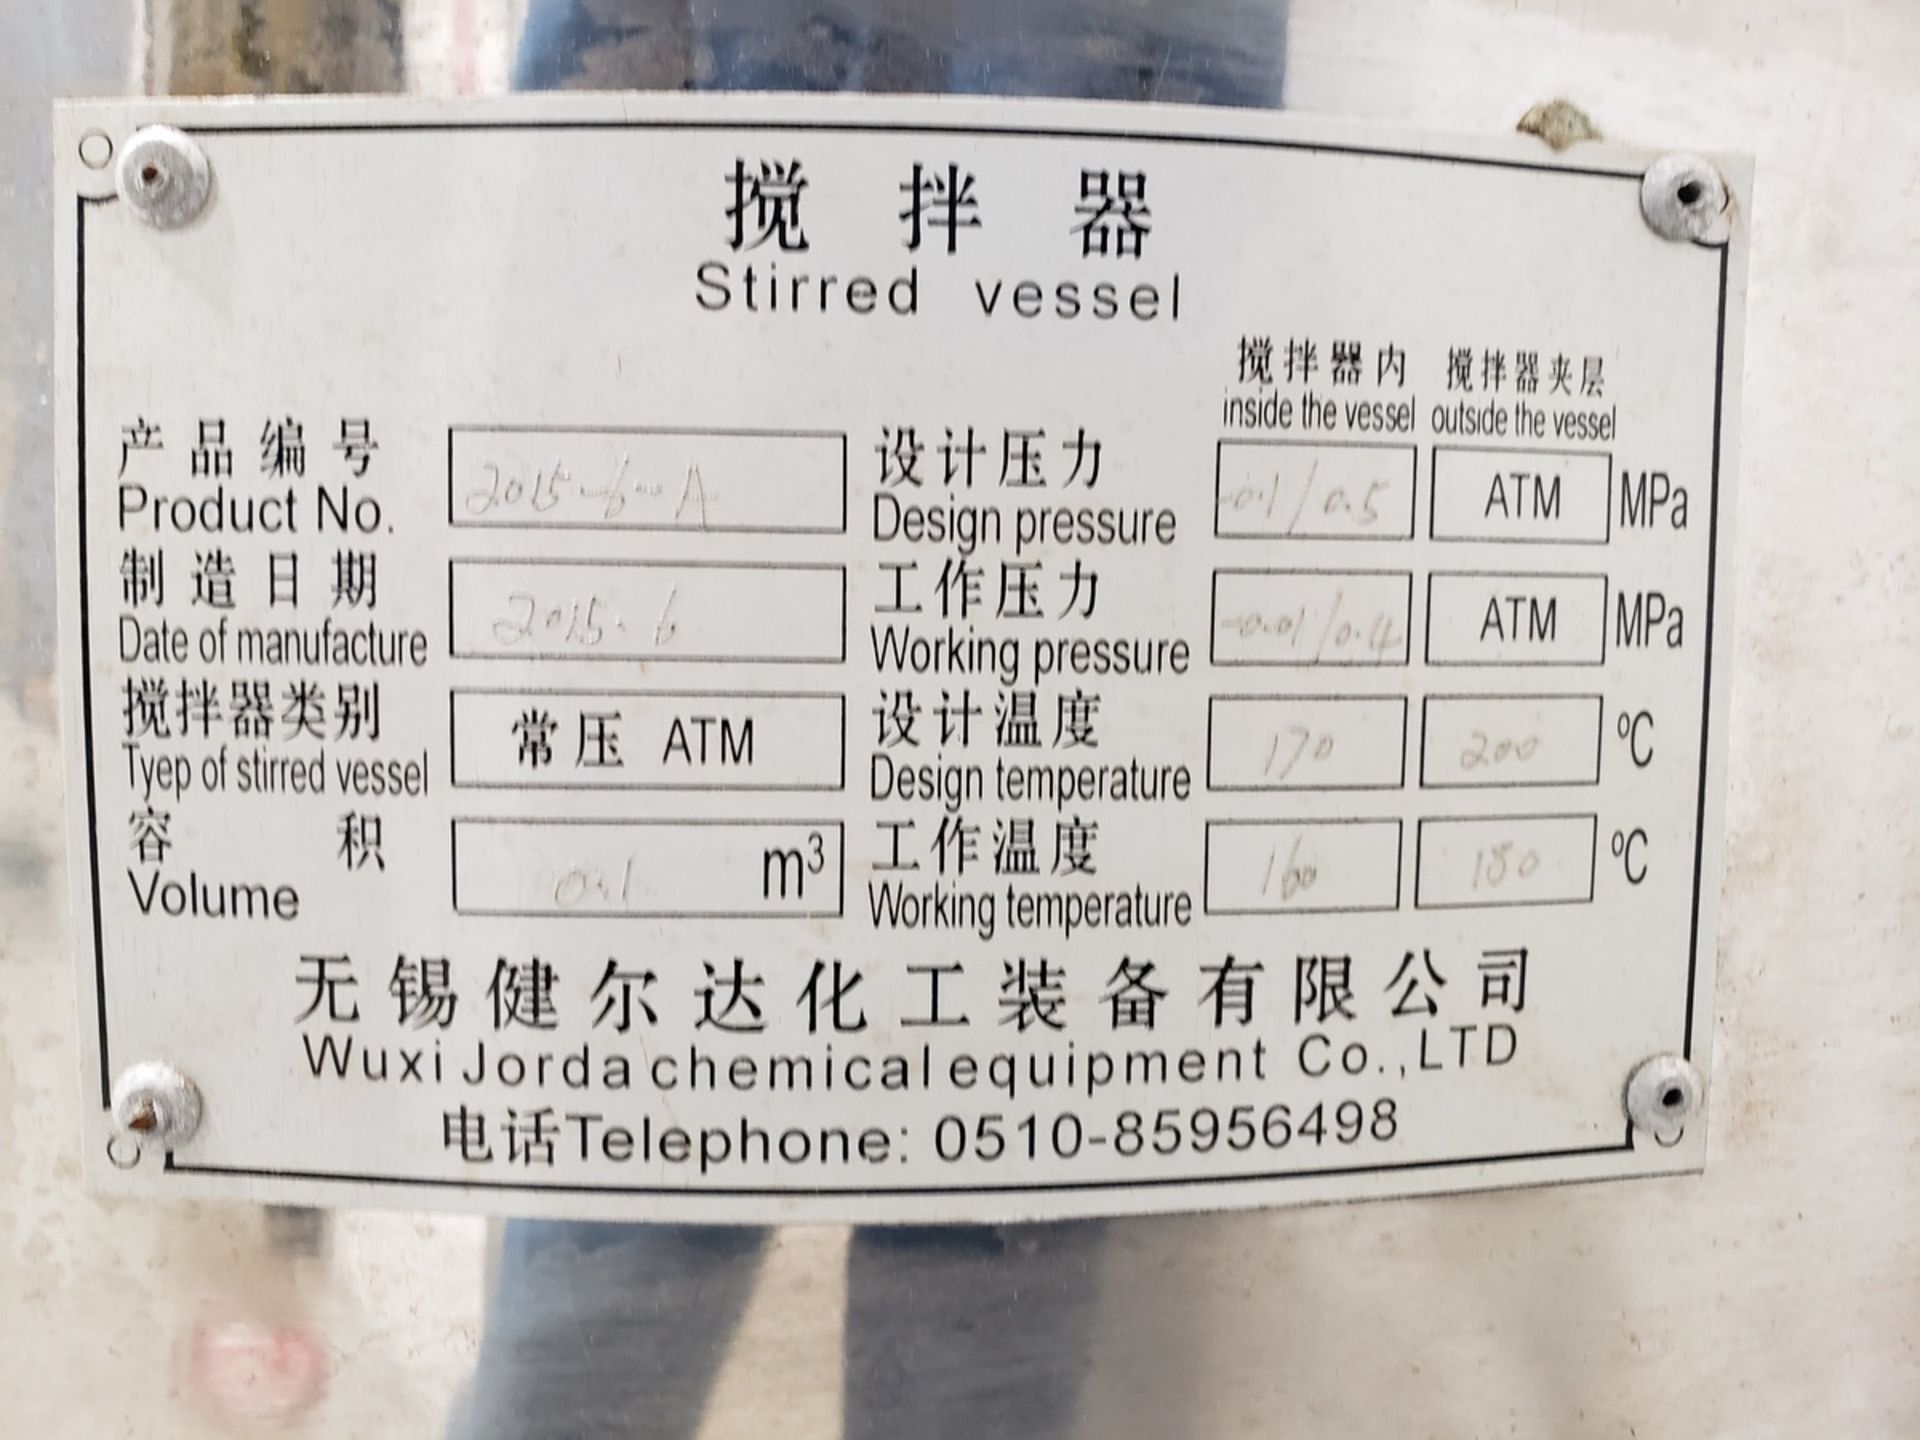 Wuxi Jorda 300 Liter Agitated Gelatin Melter | Rig Fee $300 - Image 2 of 2